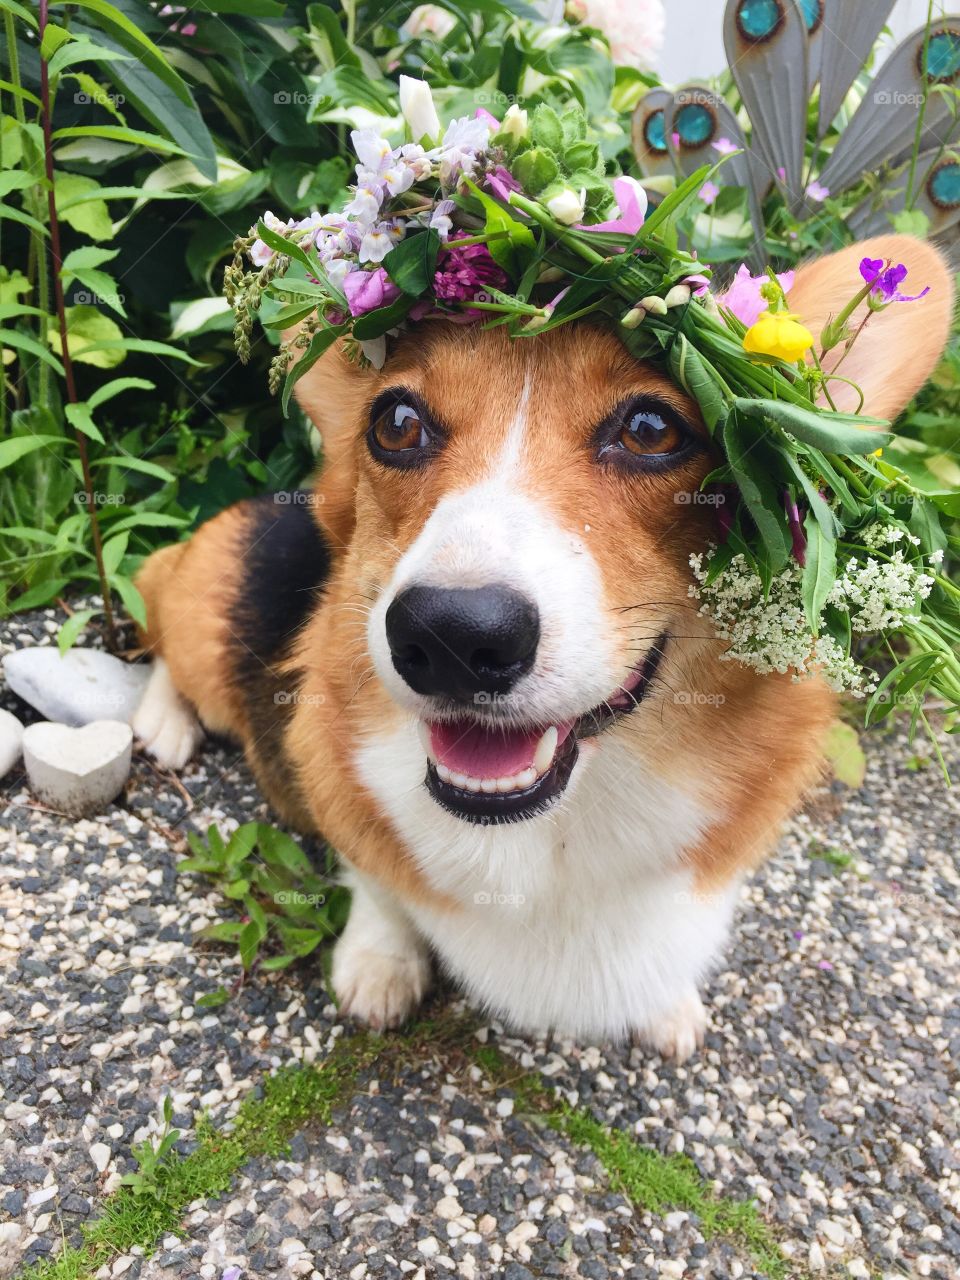 Dog with a flower wreath